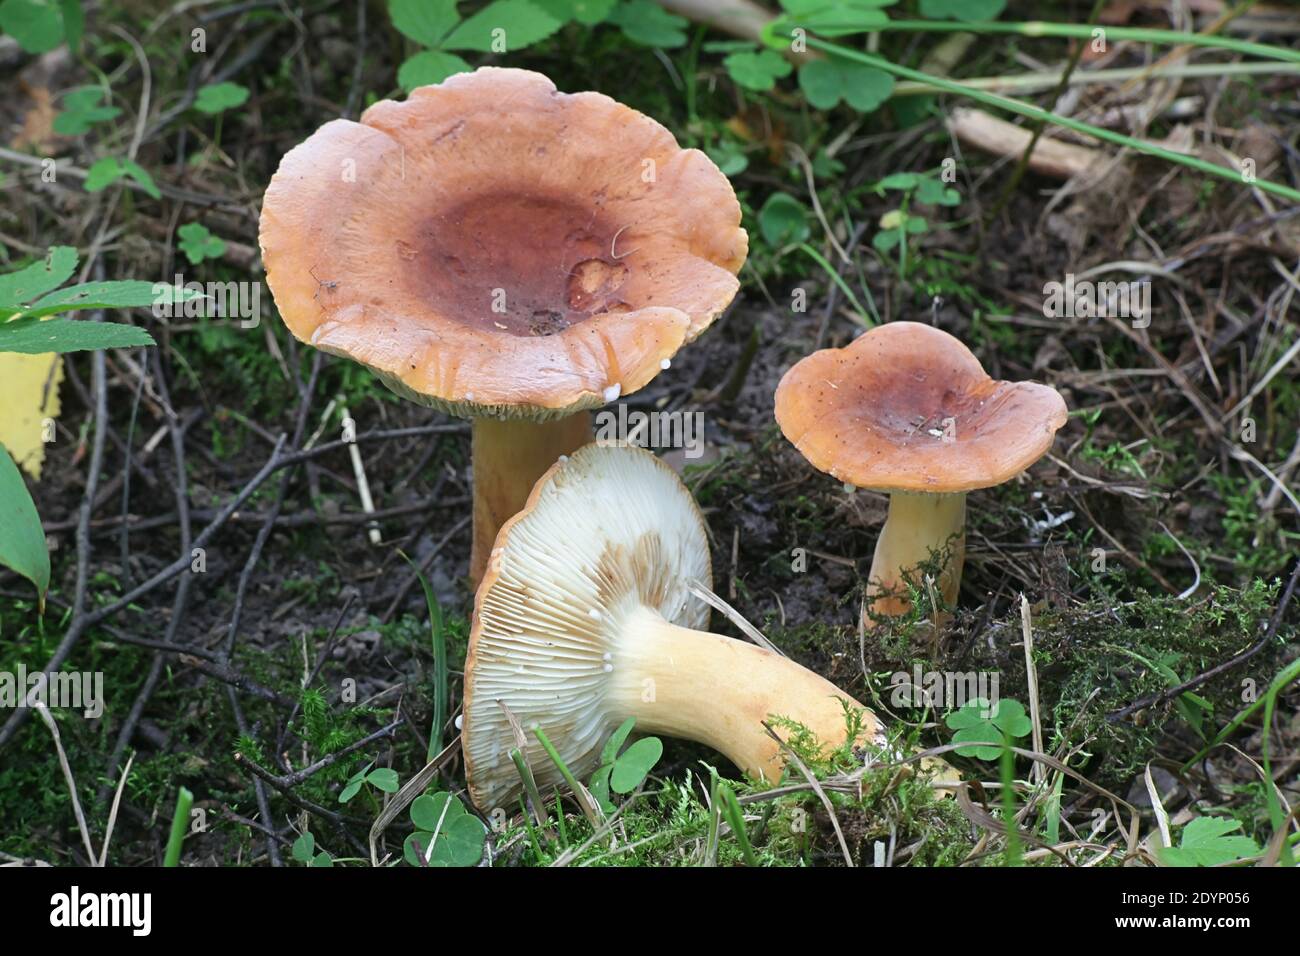 Lactifluus volemus, formerly Lactarius volemus, commonly known as fishy milkcap or weeping milk cap, wild mushroom from Finland Stock Photo